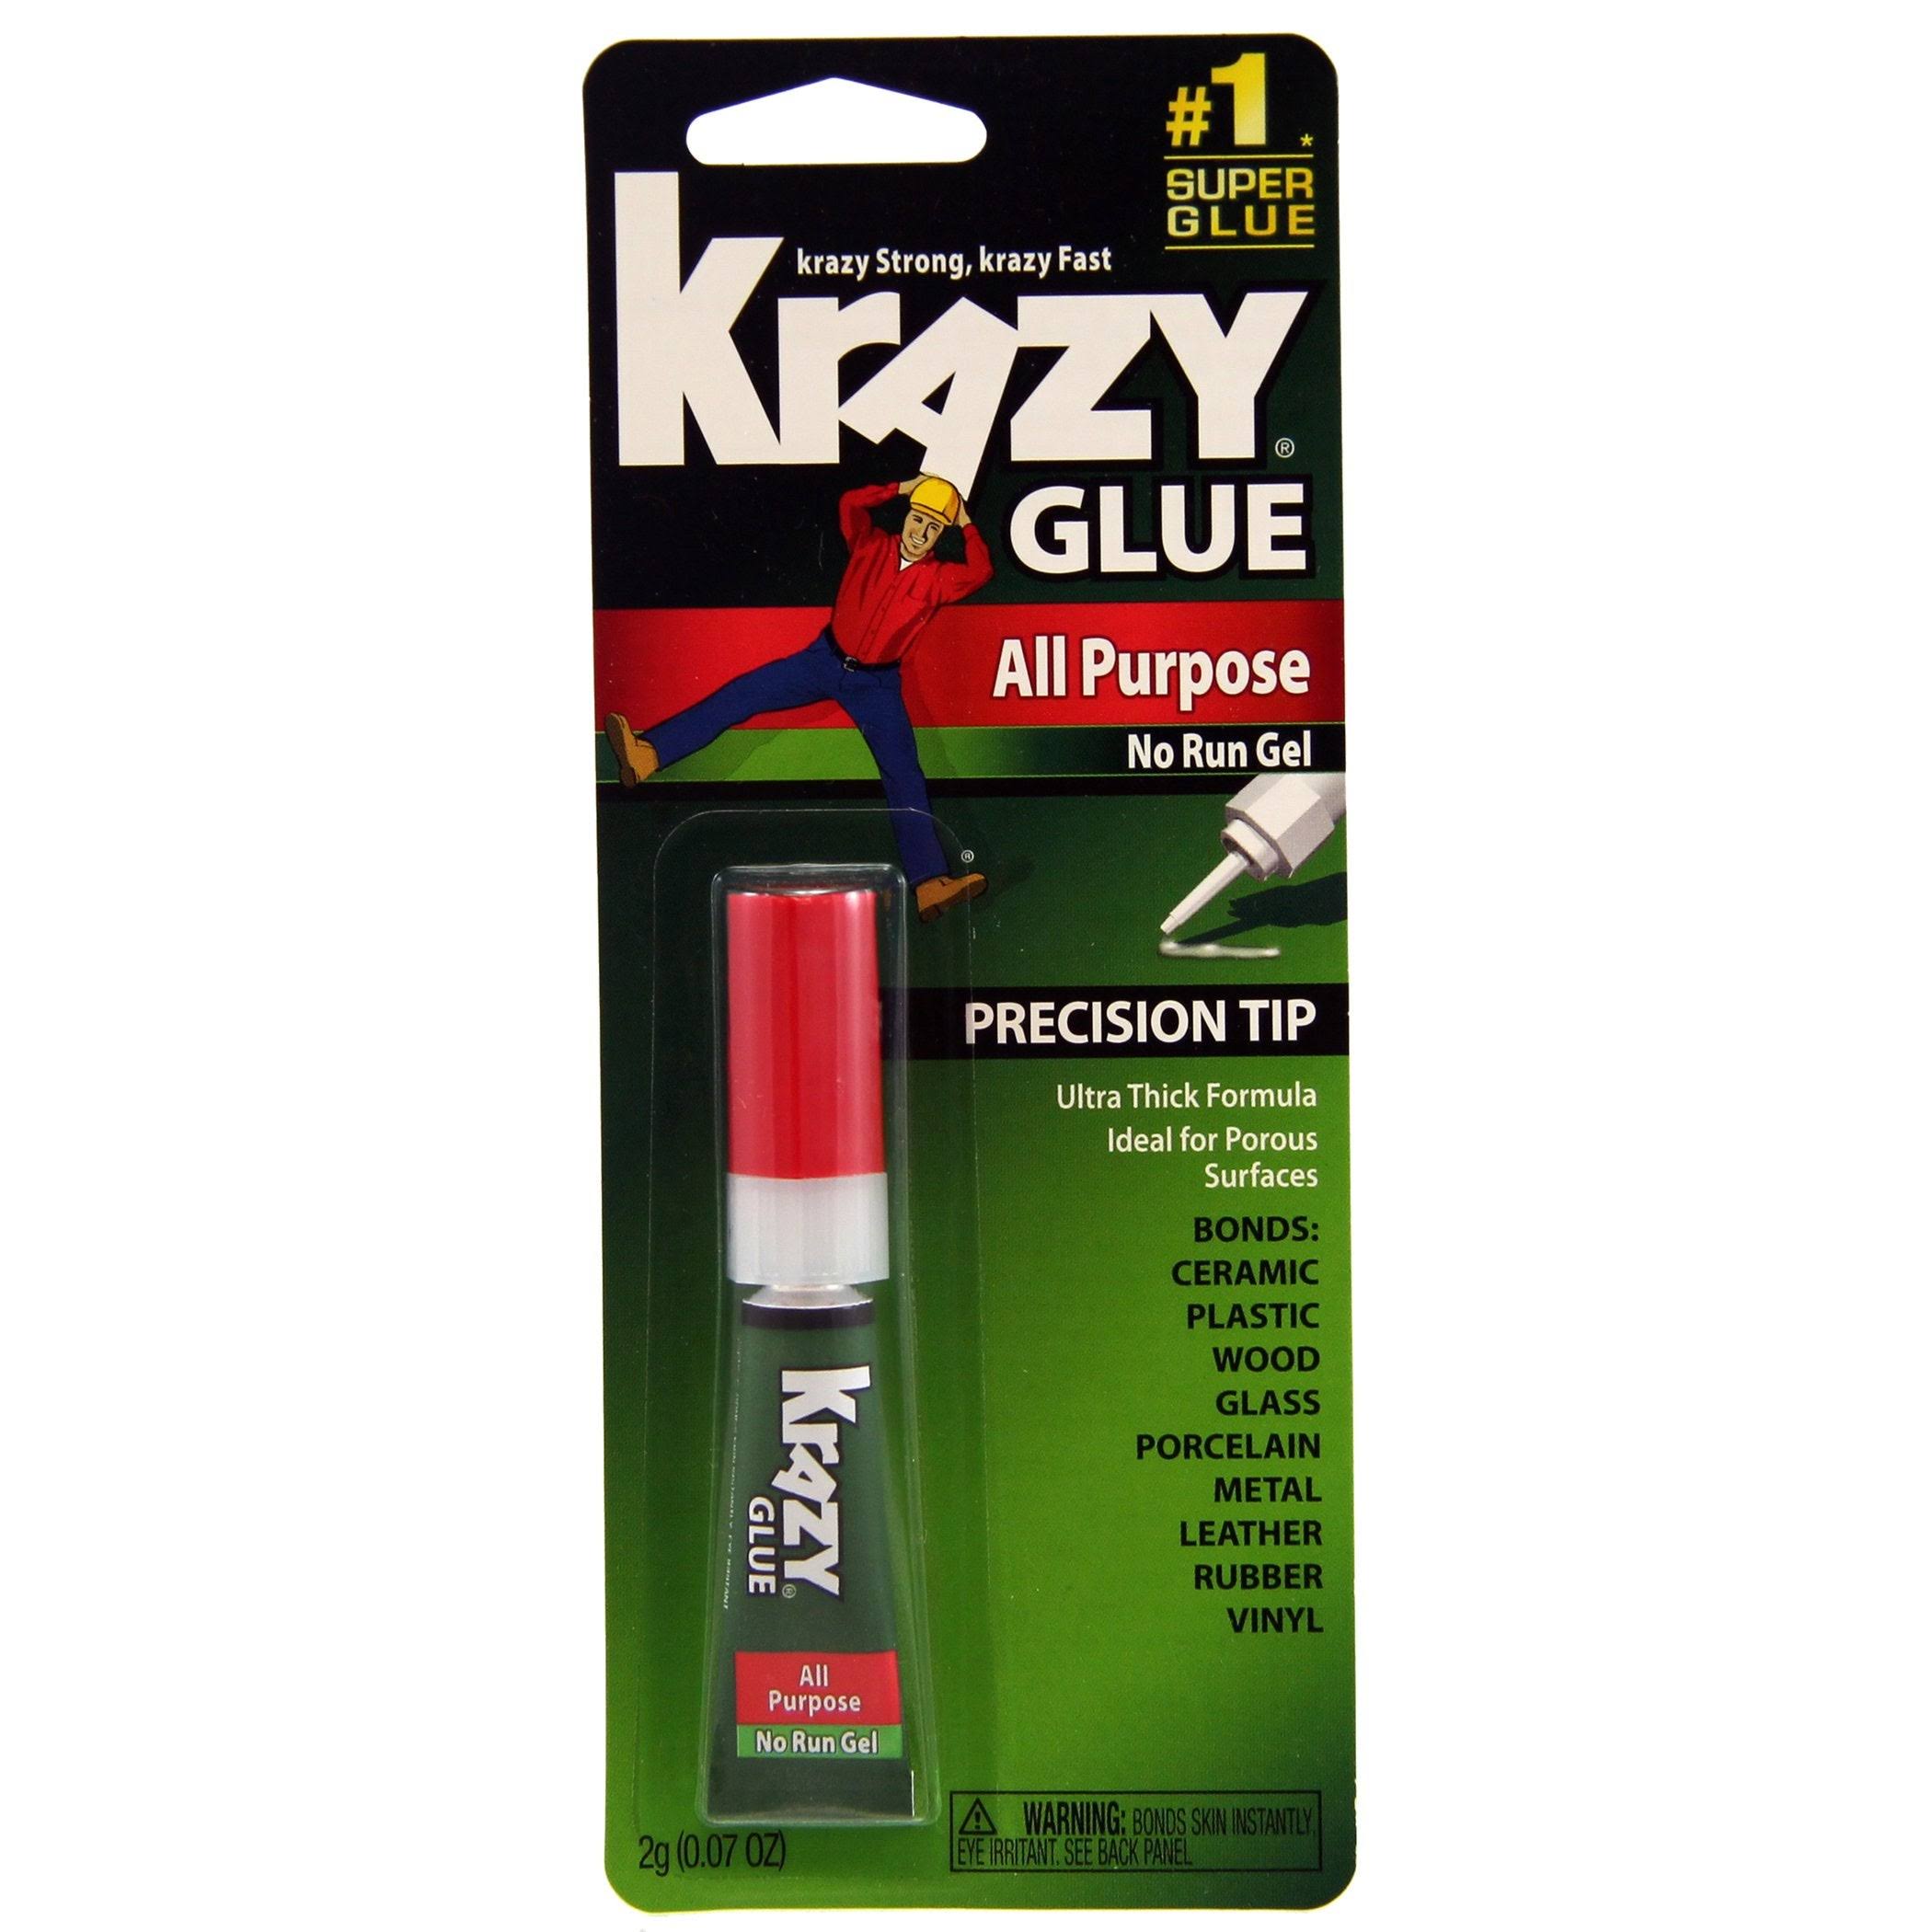 Krazy Glue All-Purpose Glue - Gel Formula, 2g